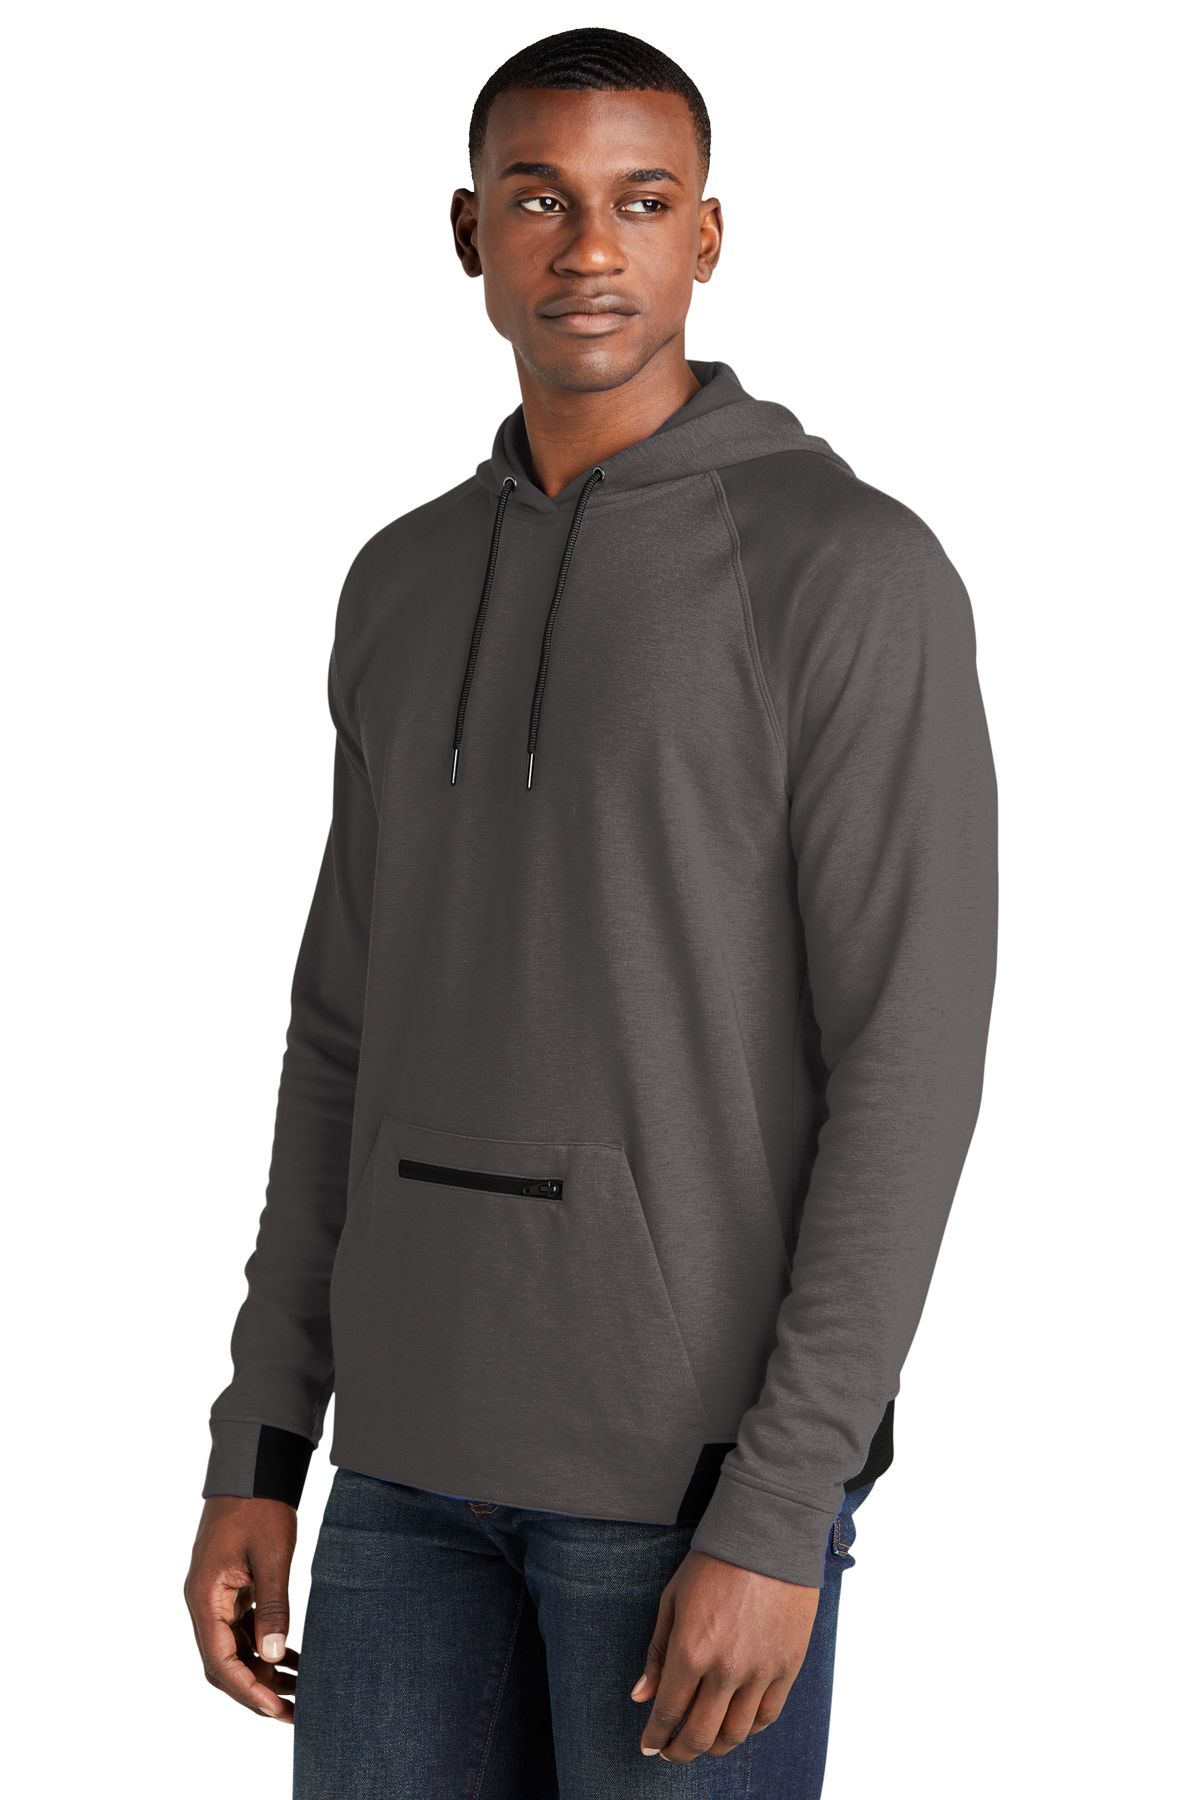 Sport-Tek PosiCharge Strive Hooded Pullover | Product | SanMar